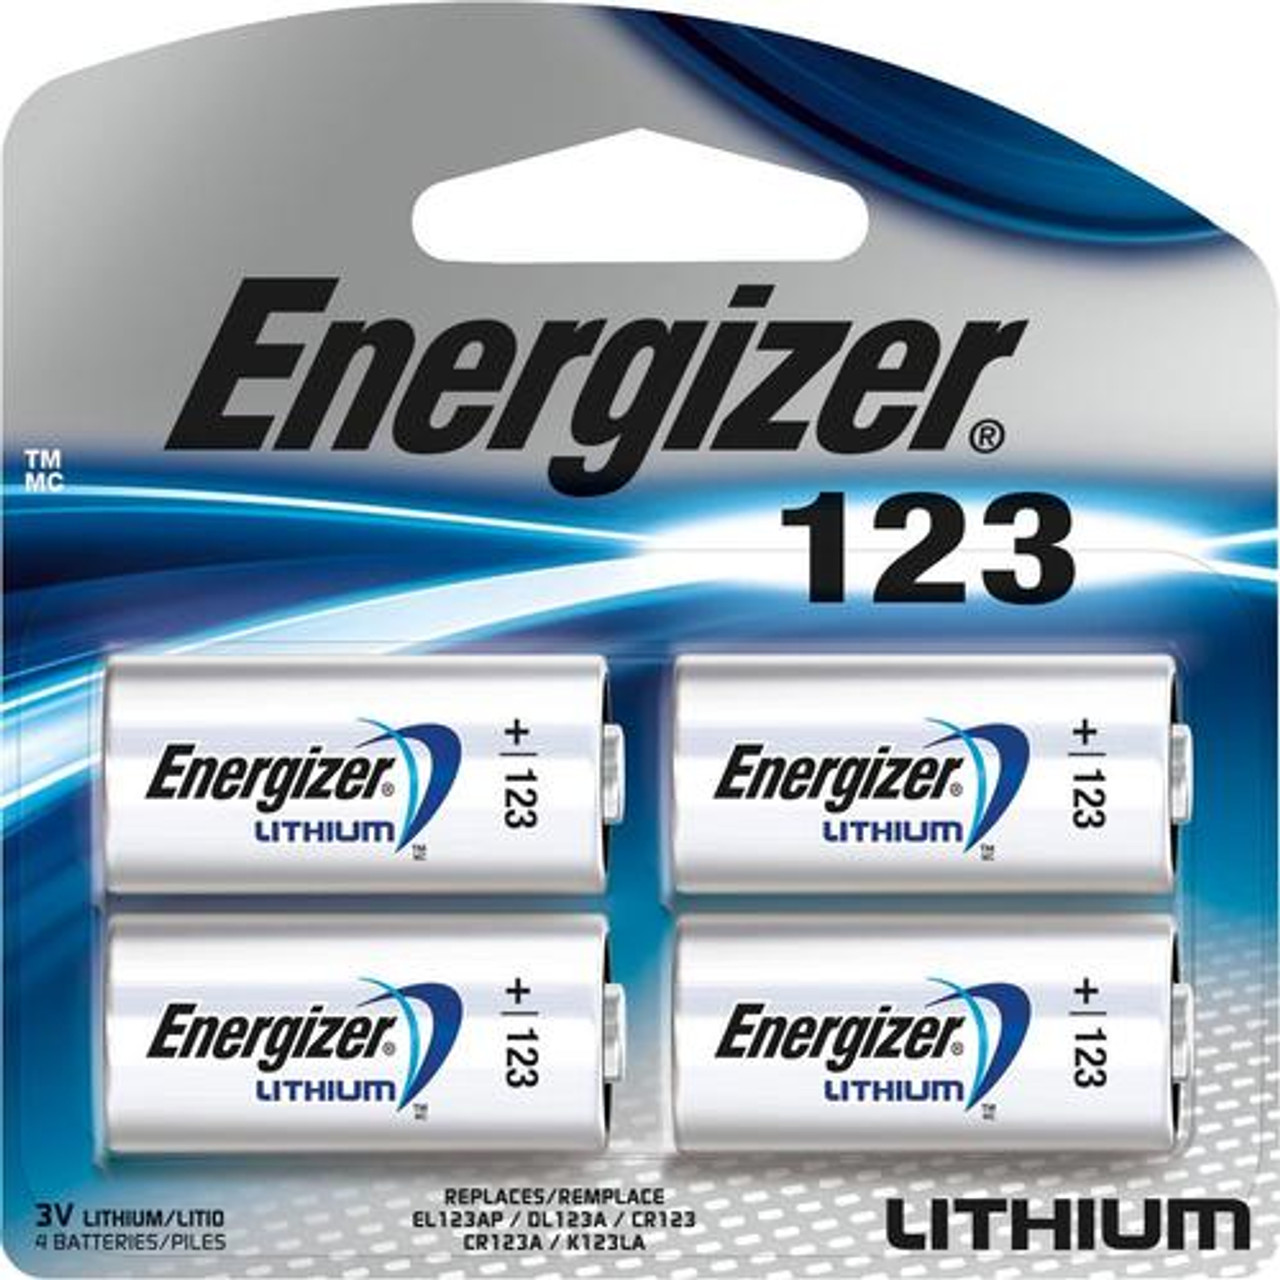 Energizer - 123 Batteries (4-Pack)